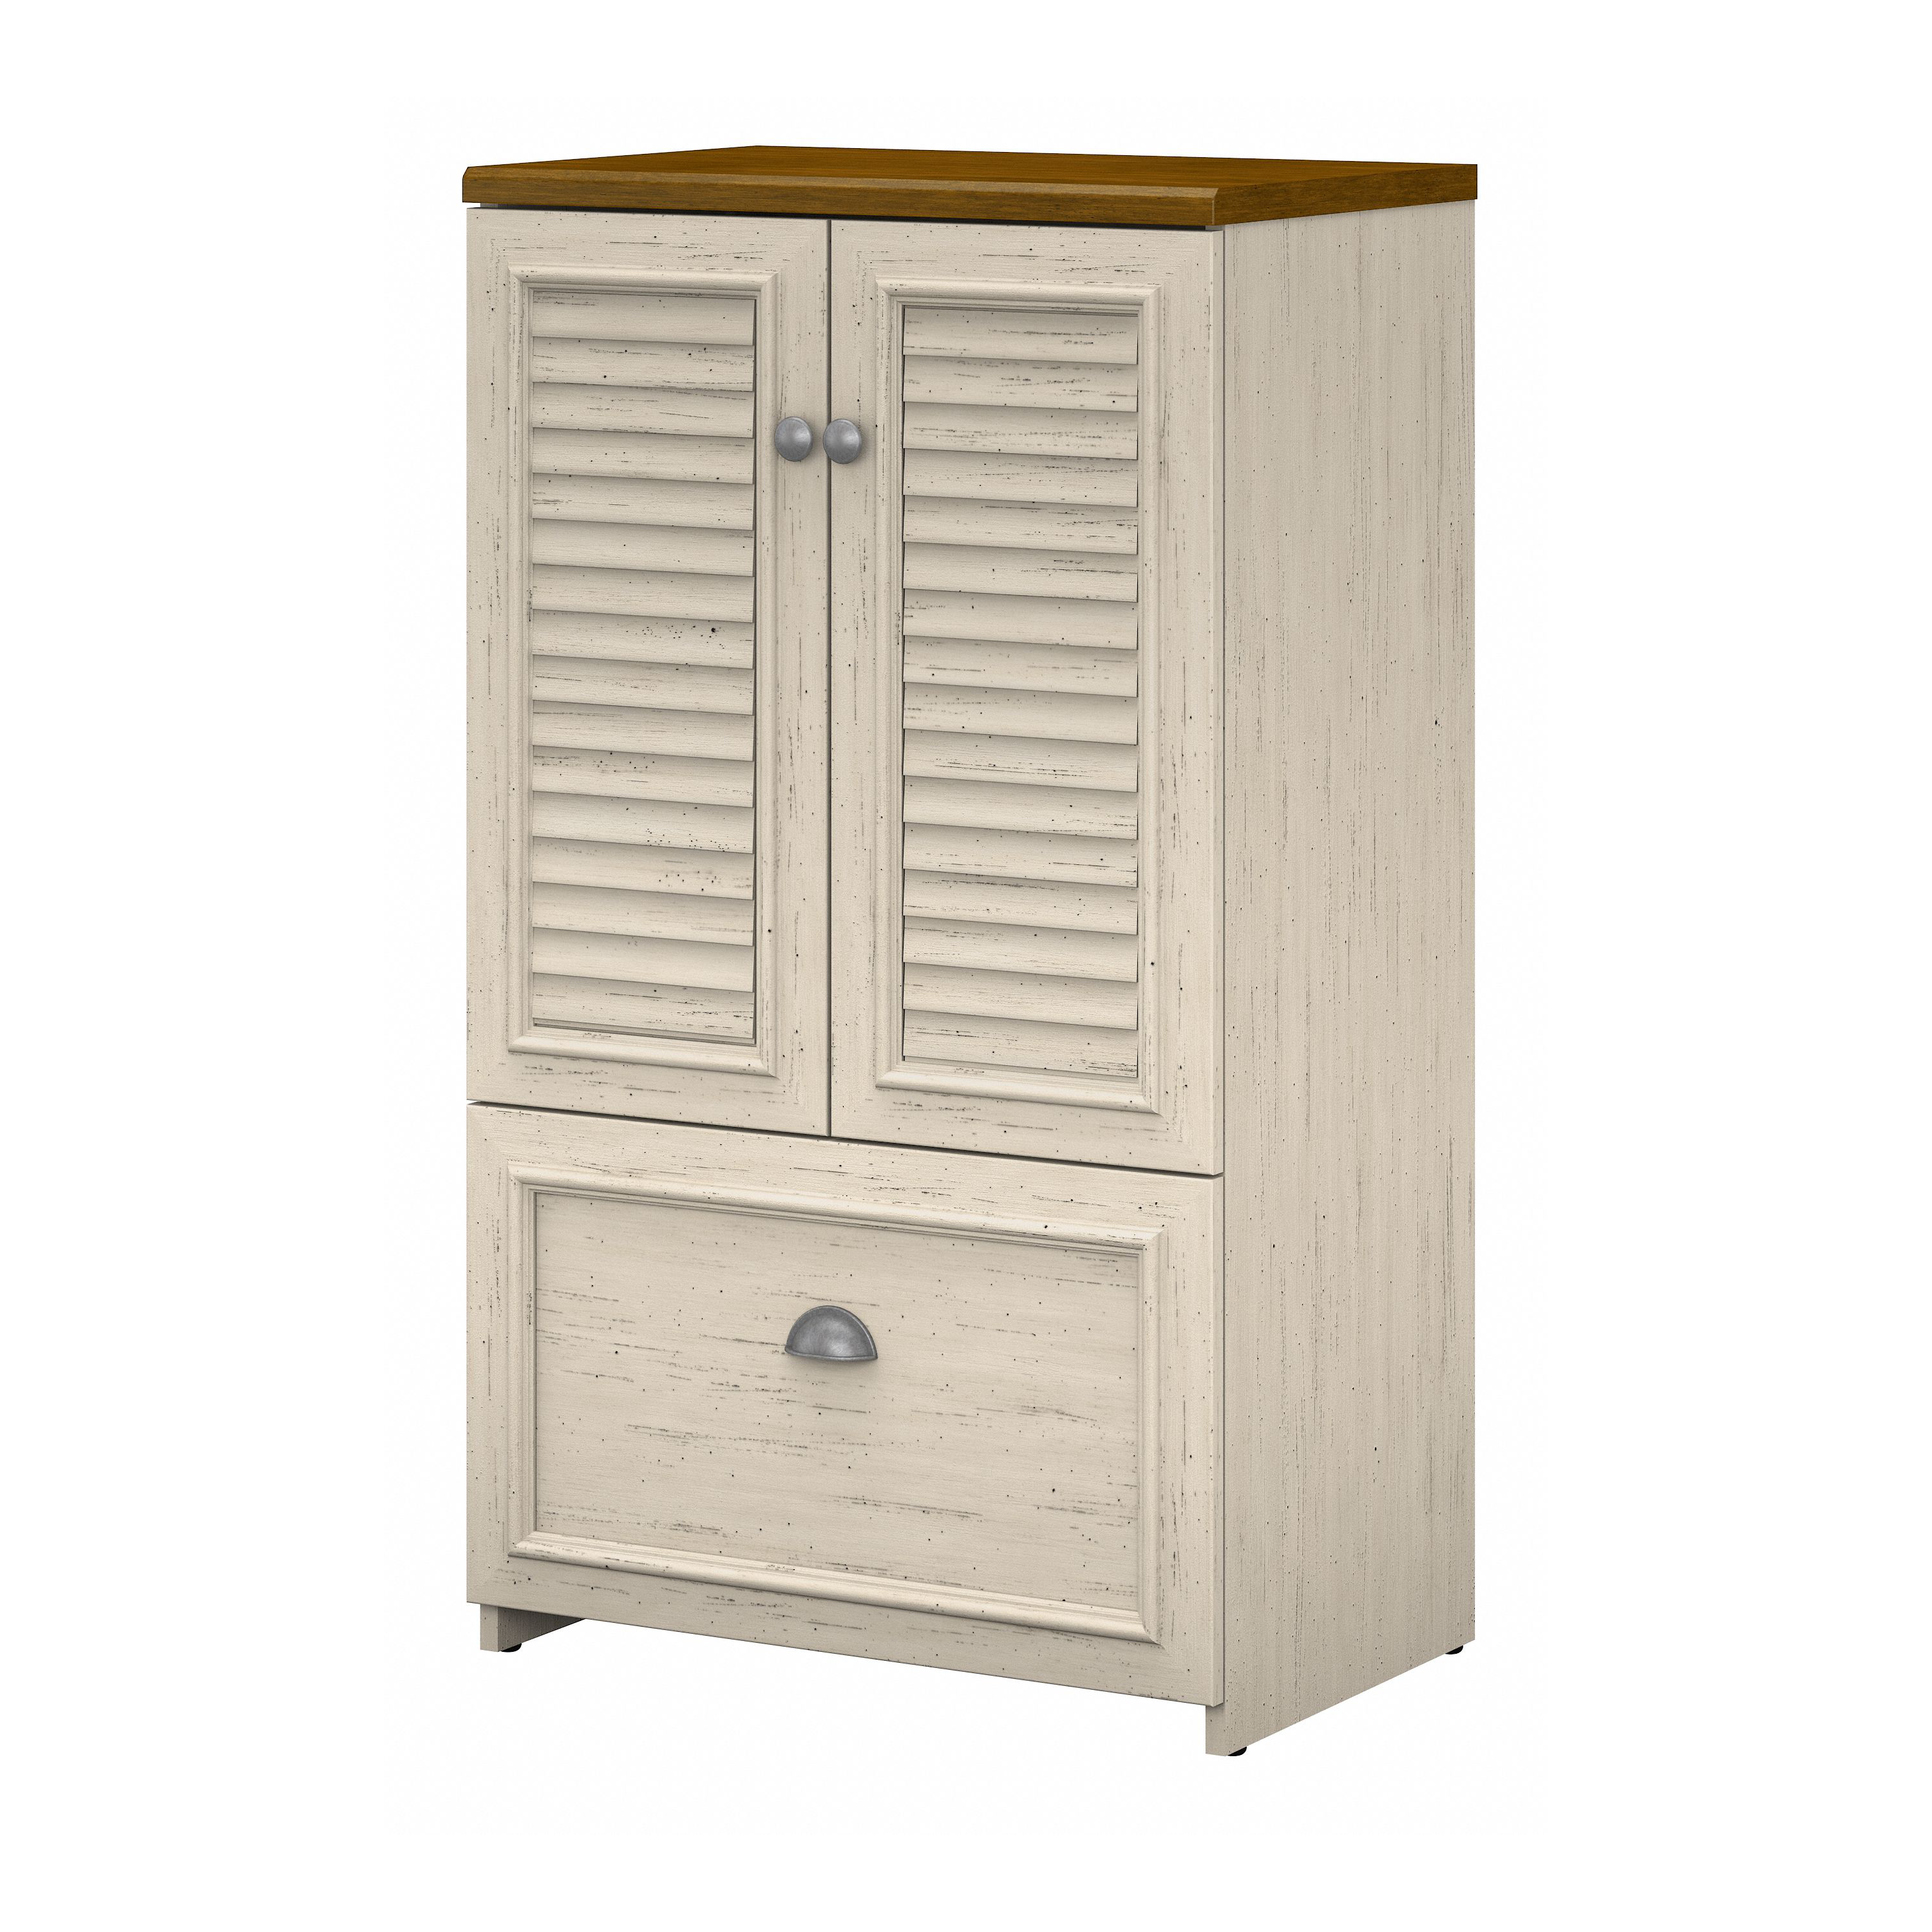 Shop Bush Furniture Fairview Shoe Storage Cabinet with Doors 02 FV020AW #color_antique white